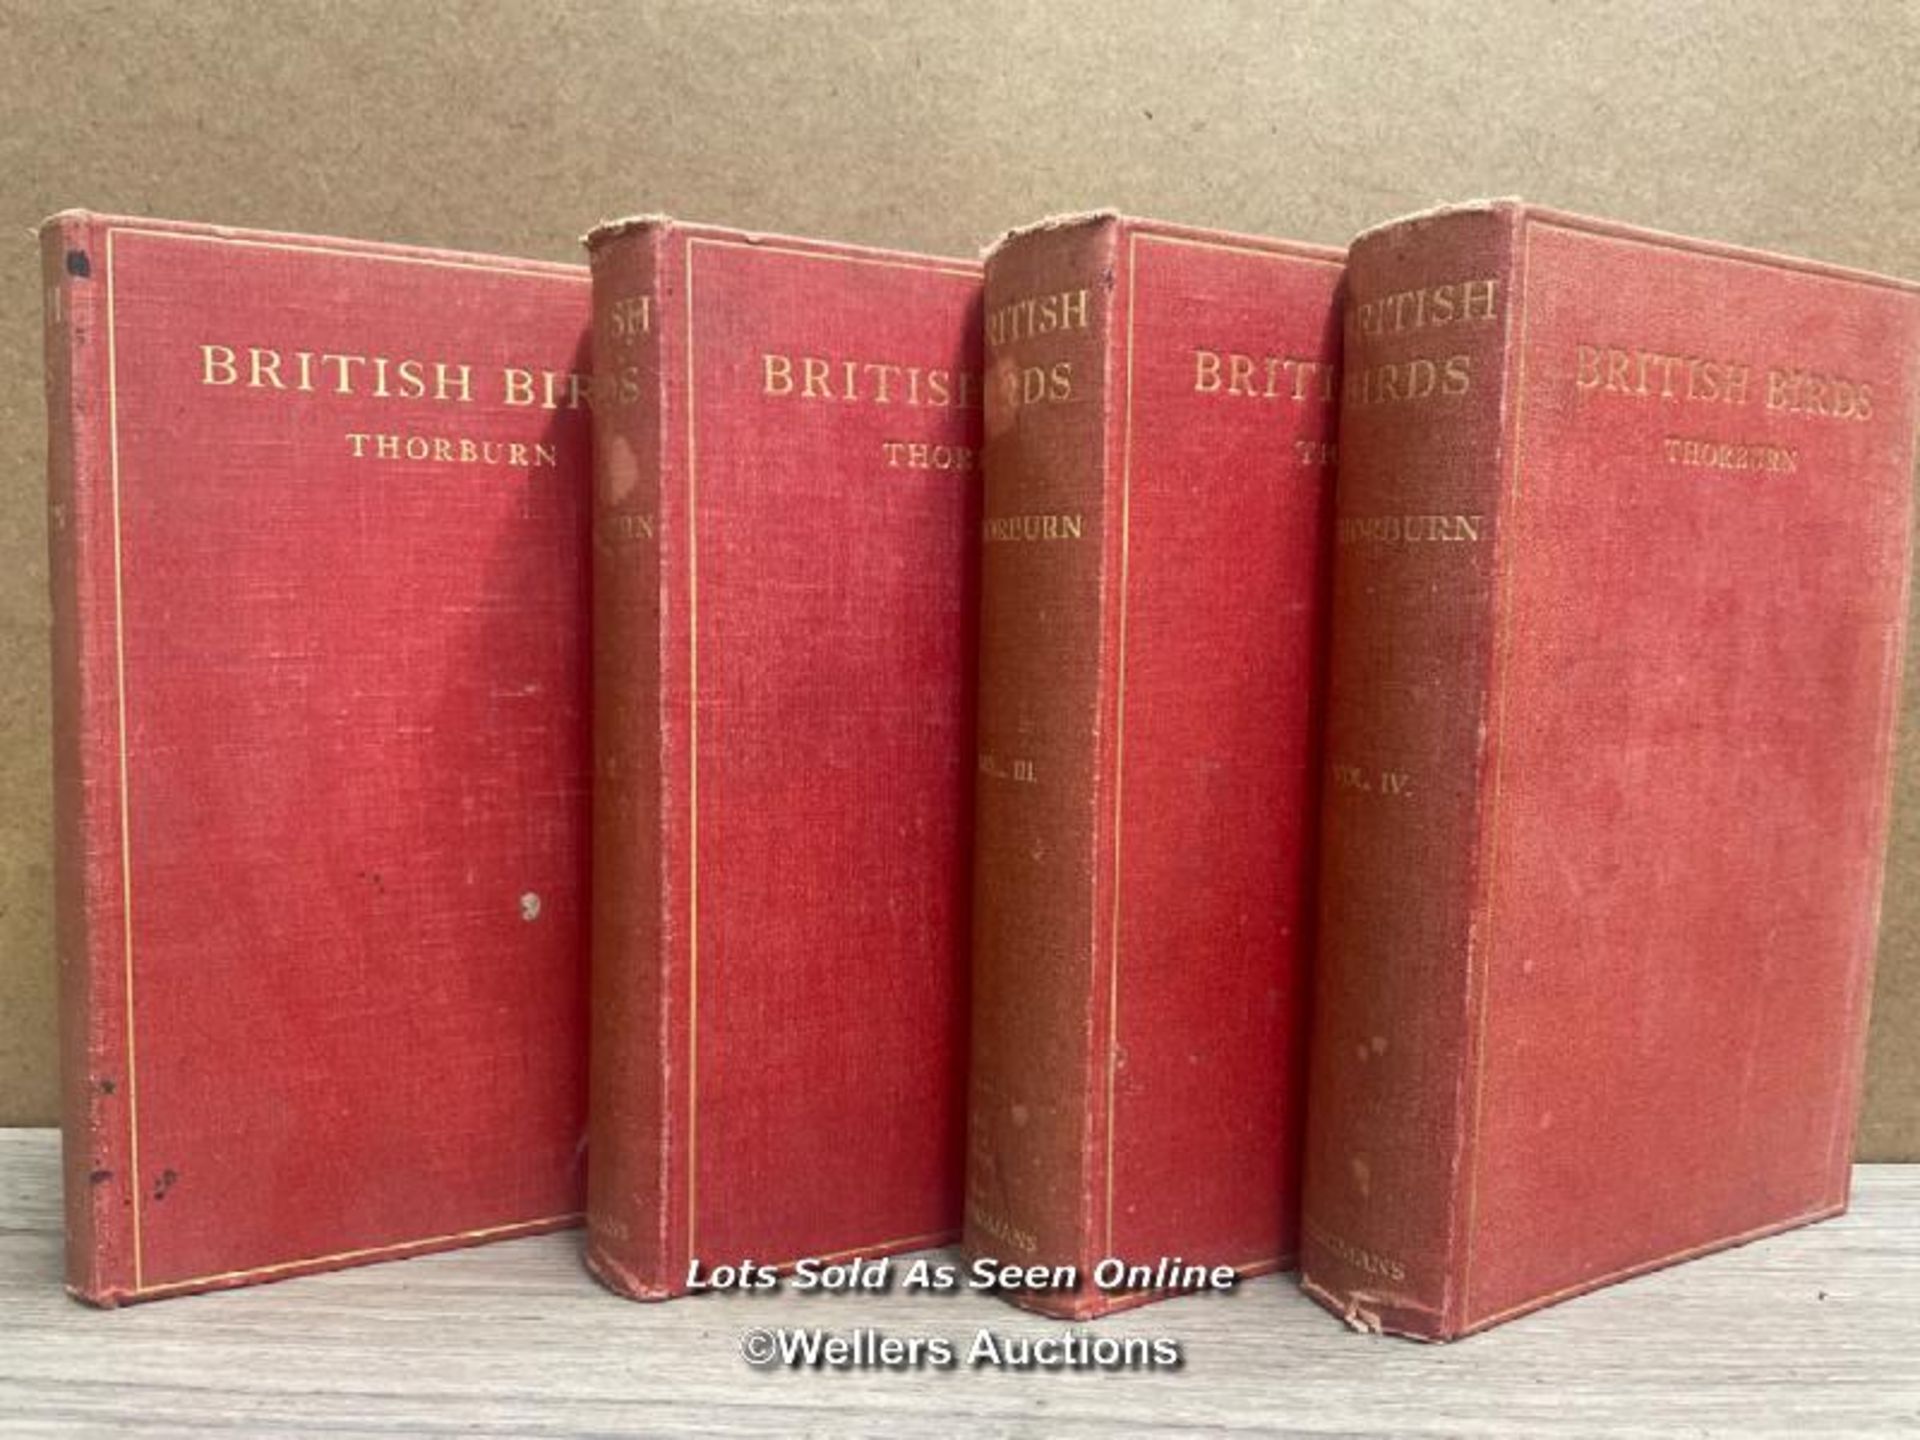 VOLUMES 1 - 4 'BRITISH BIRDS' BY THORNBURN LIMITED EDITION 57/205, C1925. - Image 2 of 8